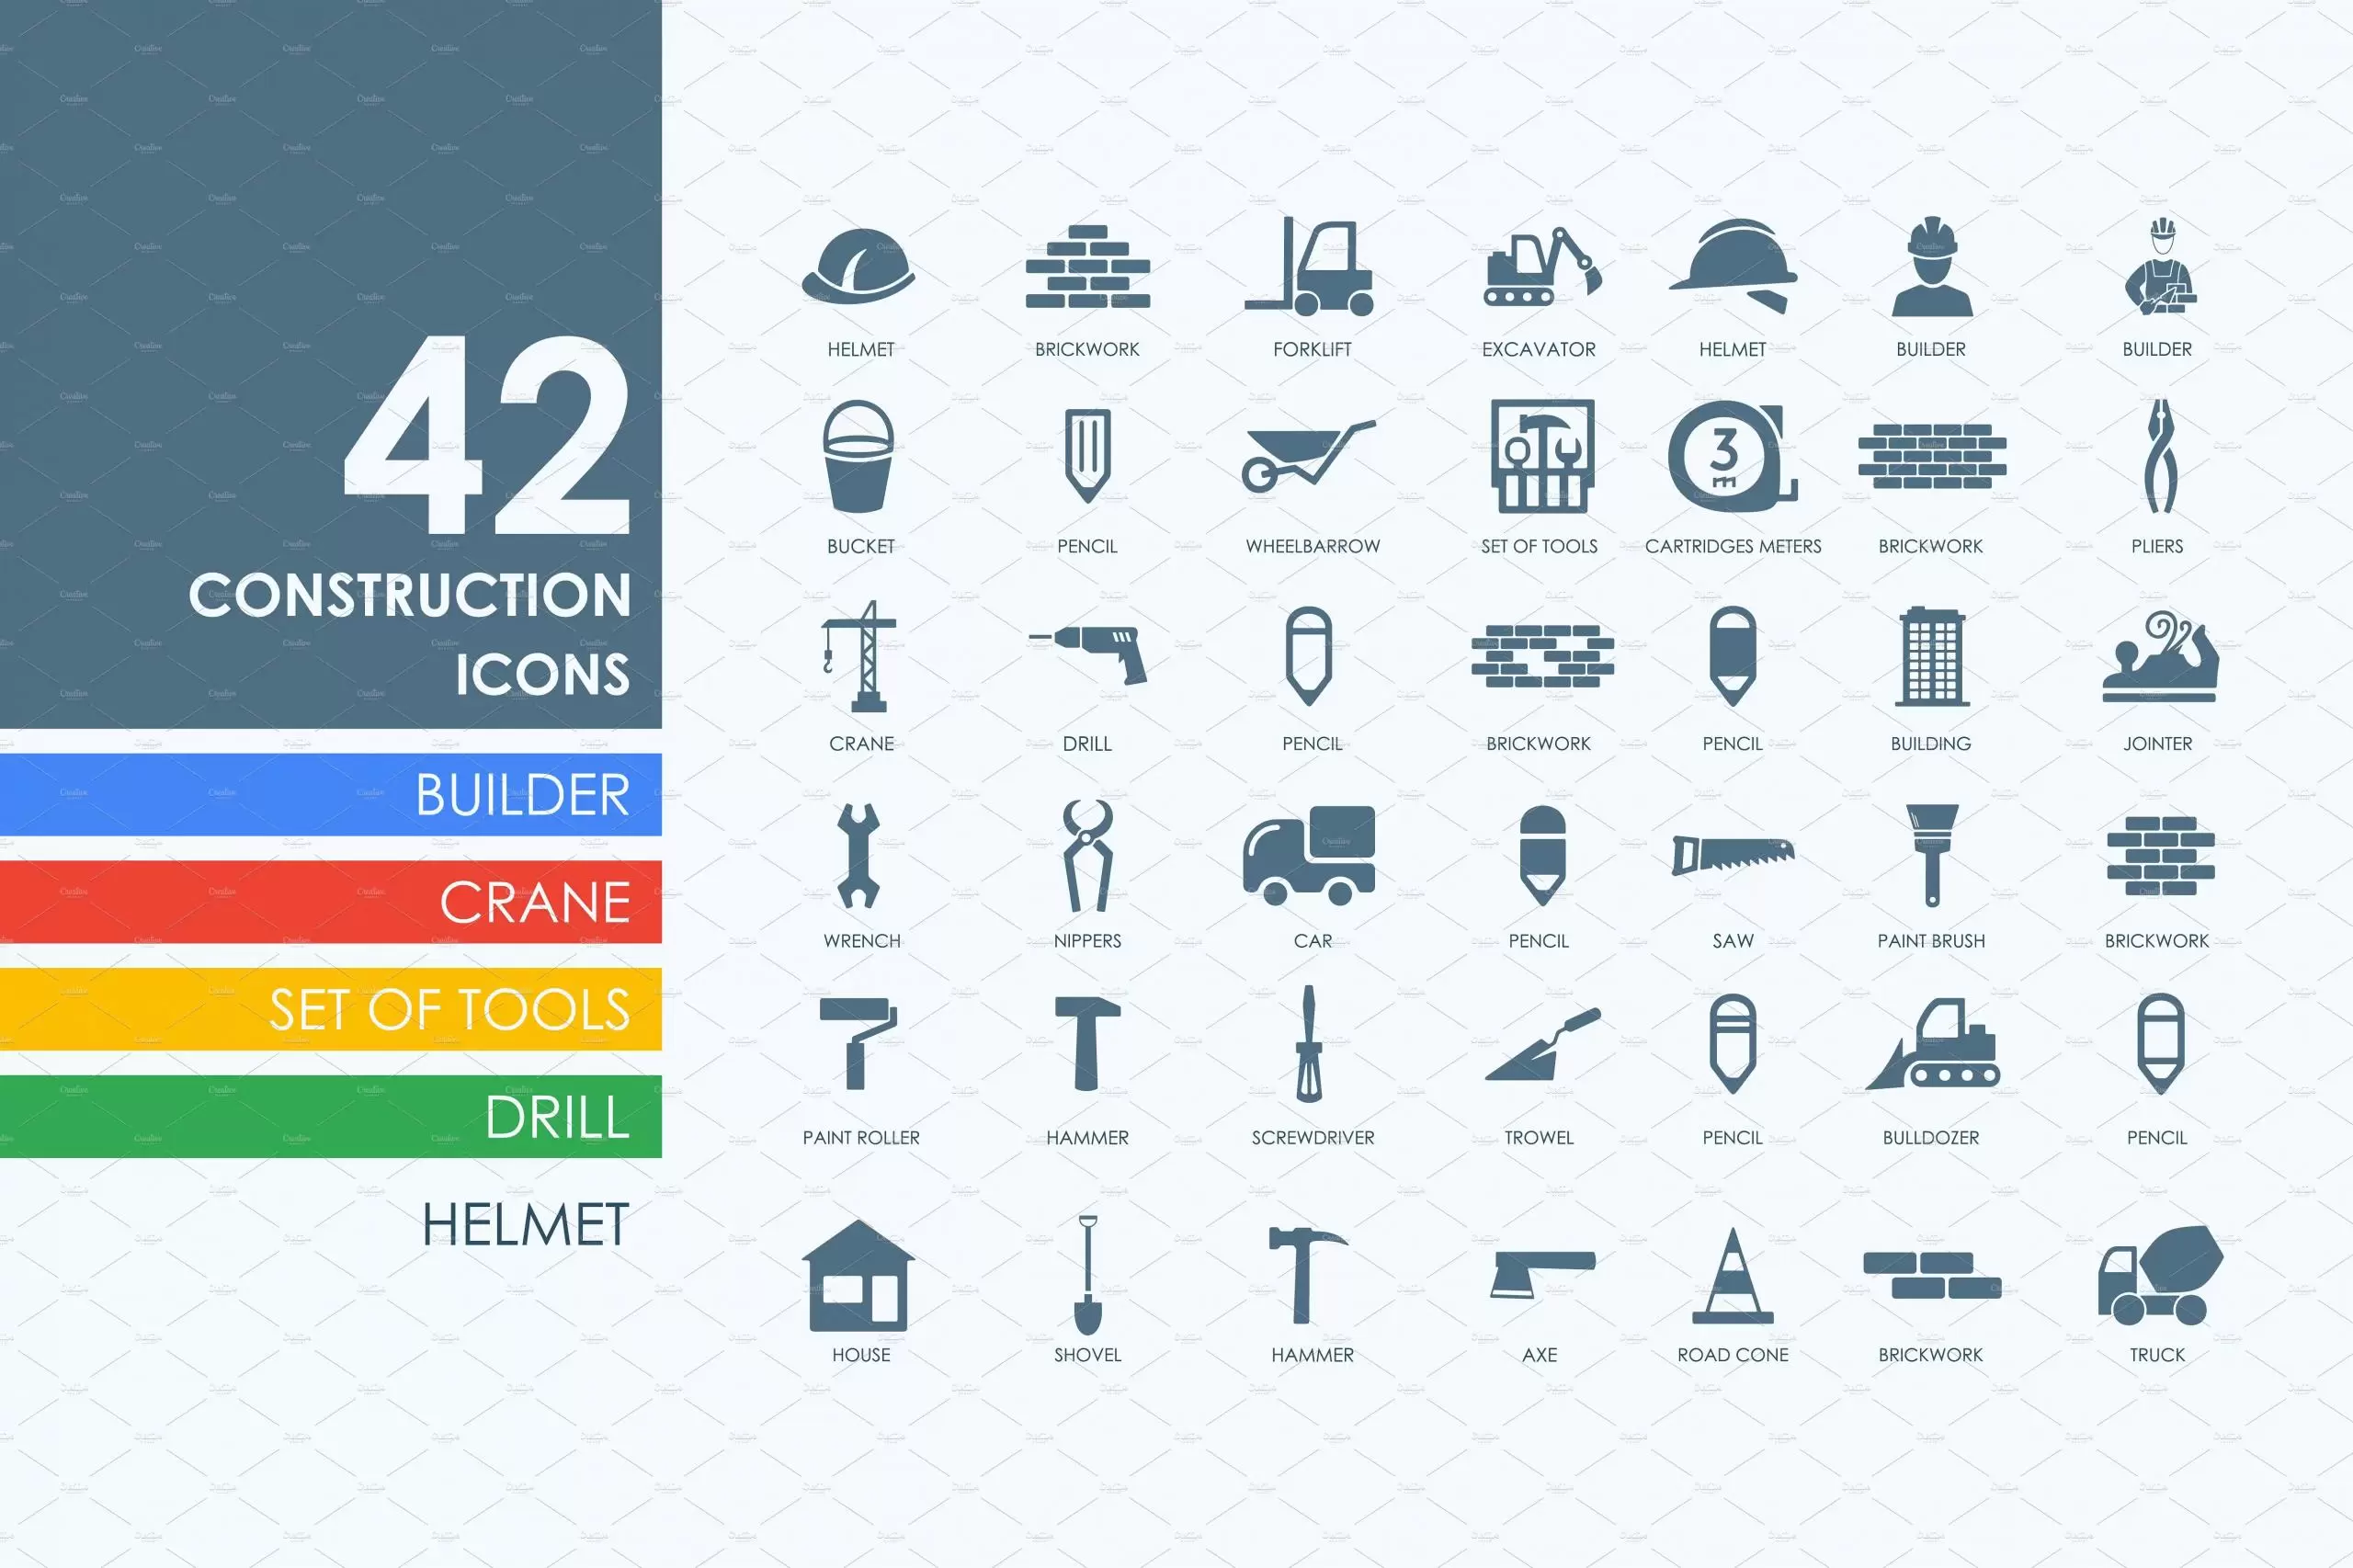 建设图标素材 42 construction icons插图